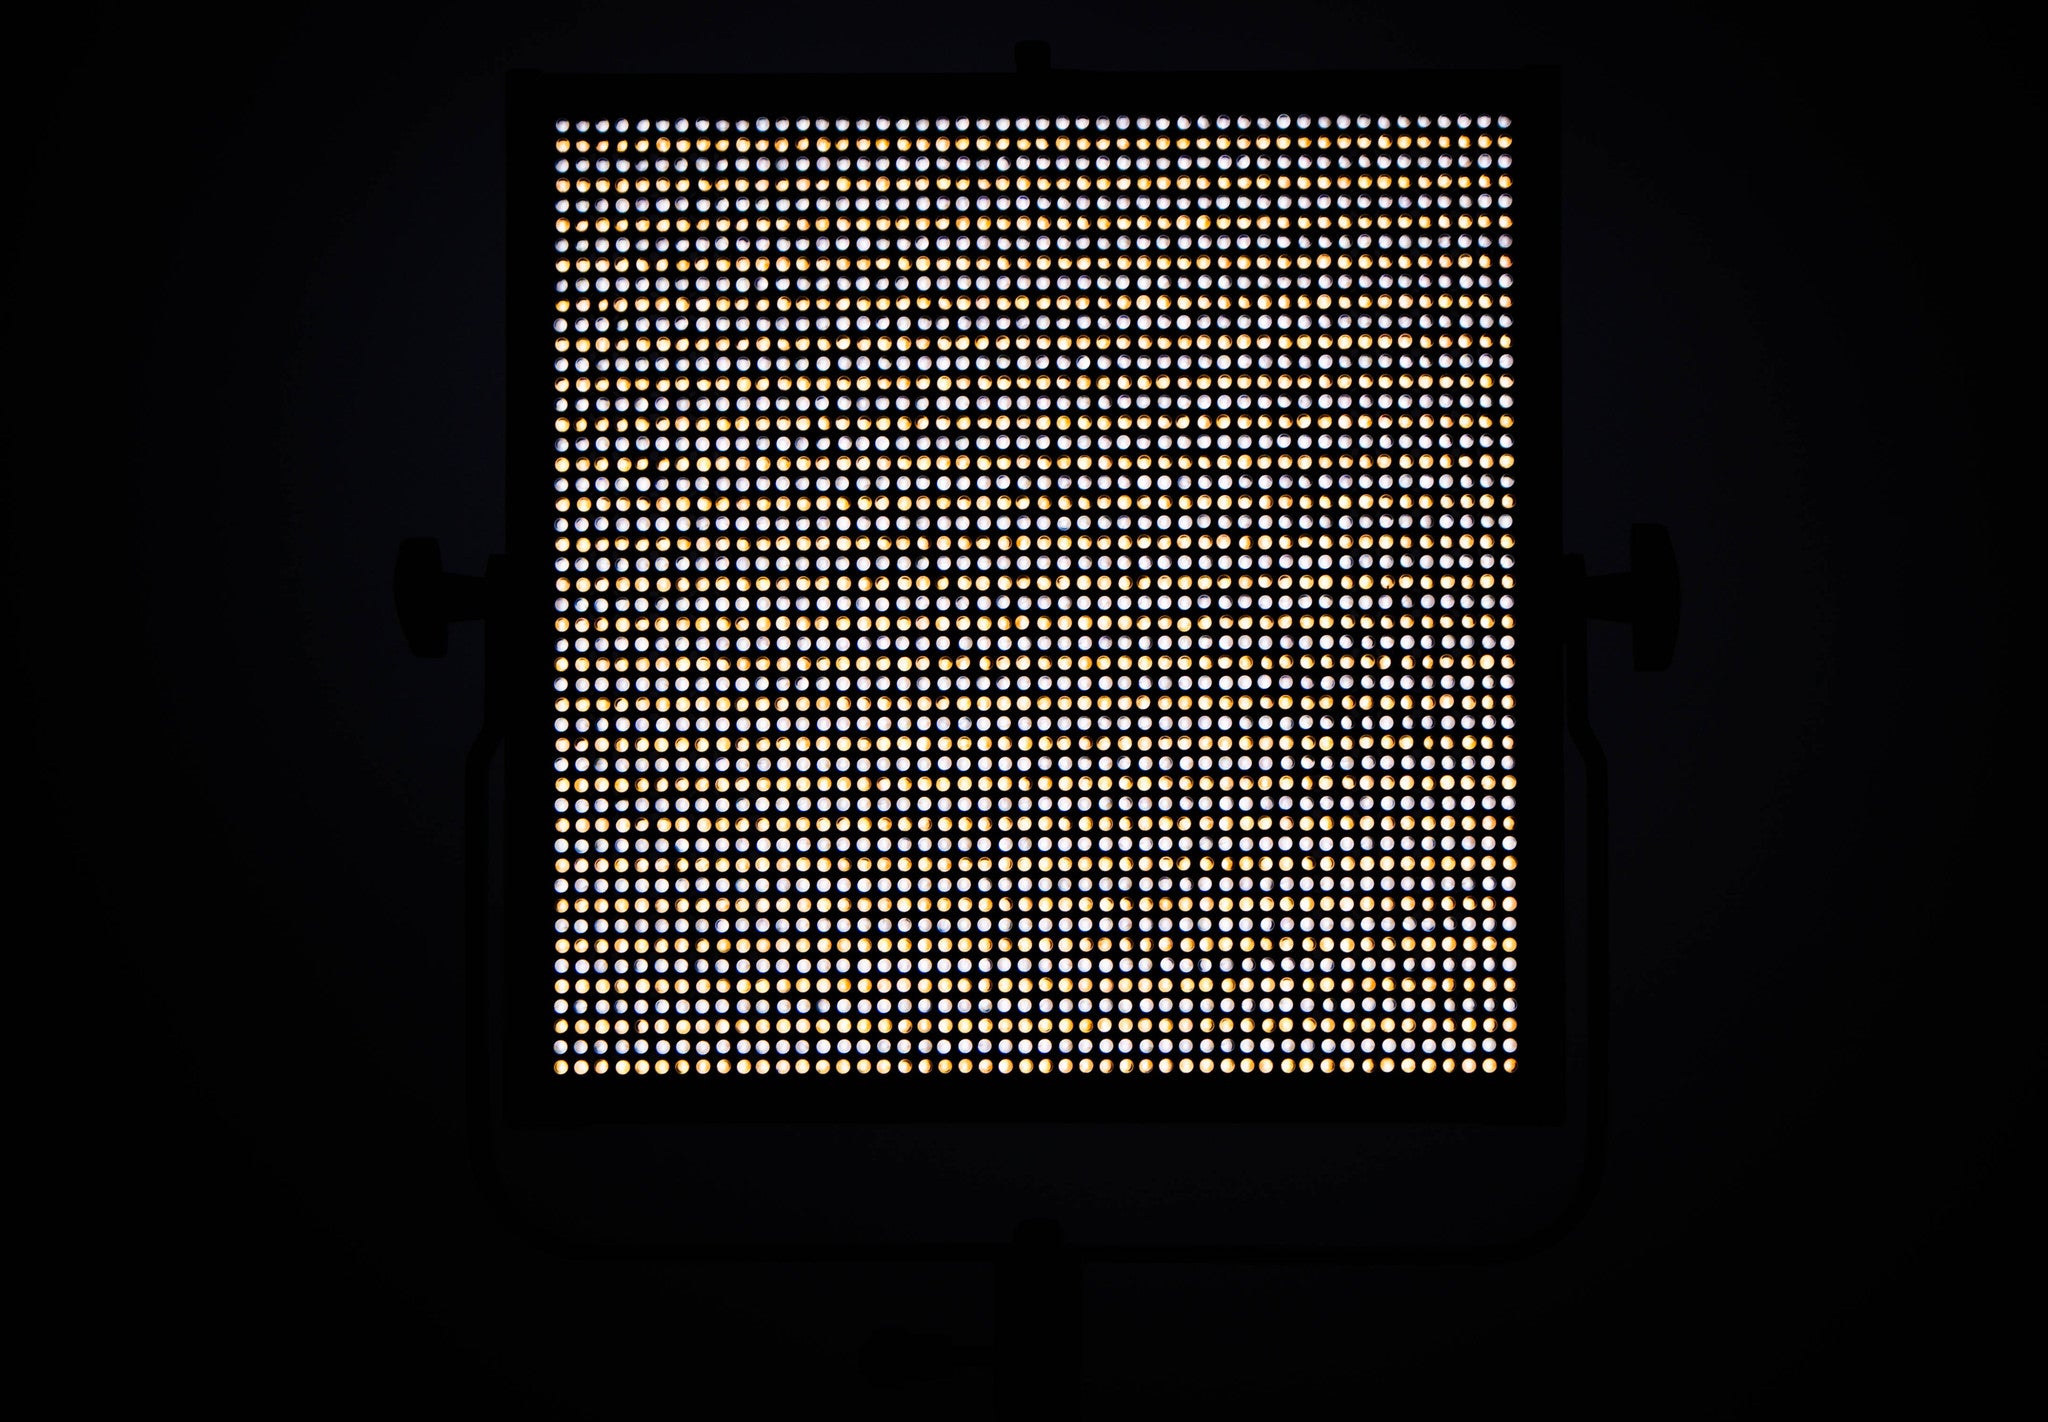 2,304 LED's - Intellytech Socanland NovaCTD - Digital, Bi-Color, 1x1 LED Light Panel with diffusion